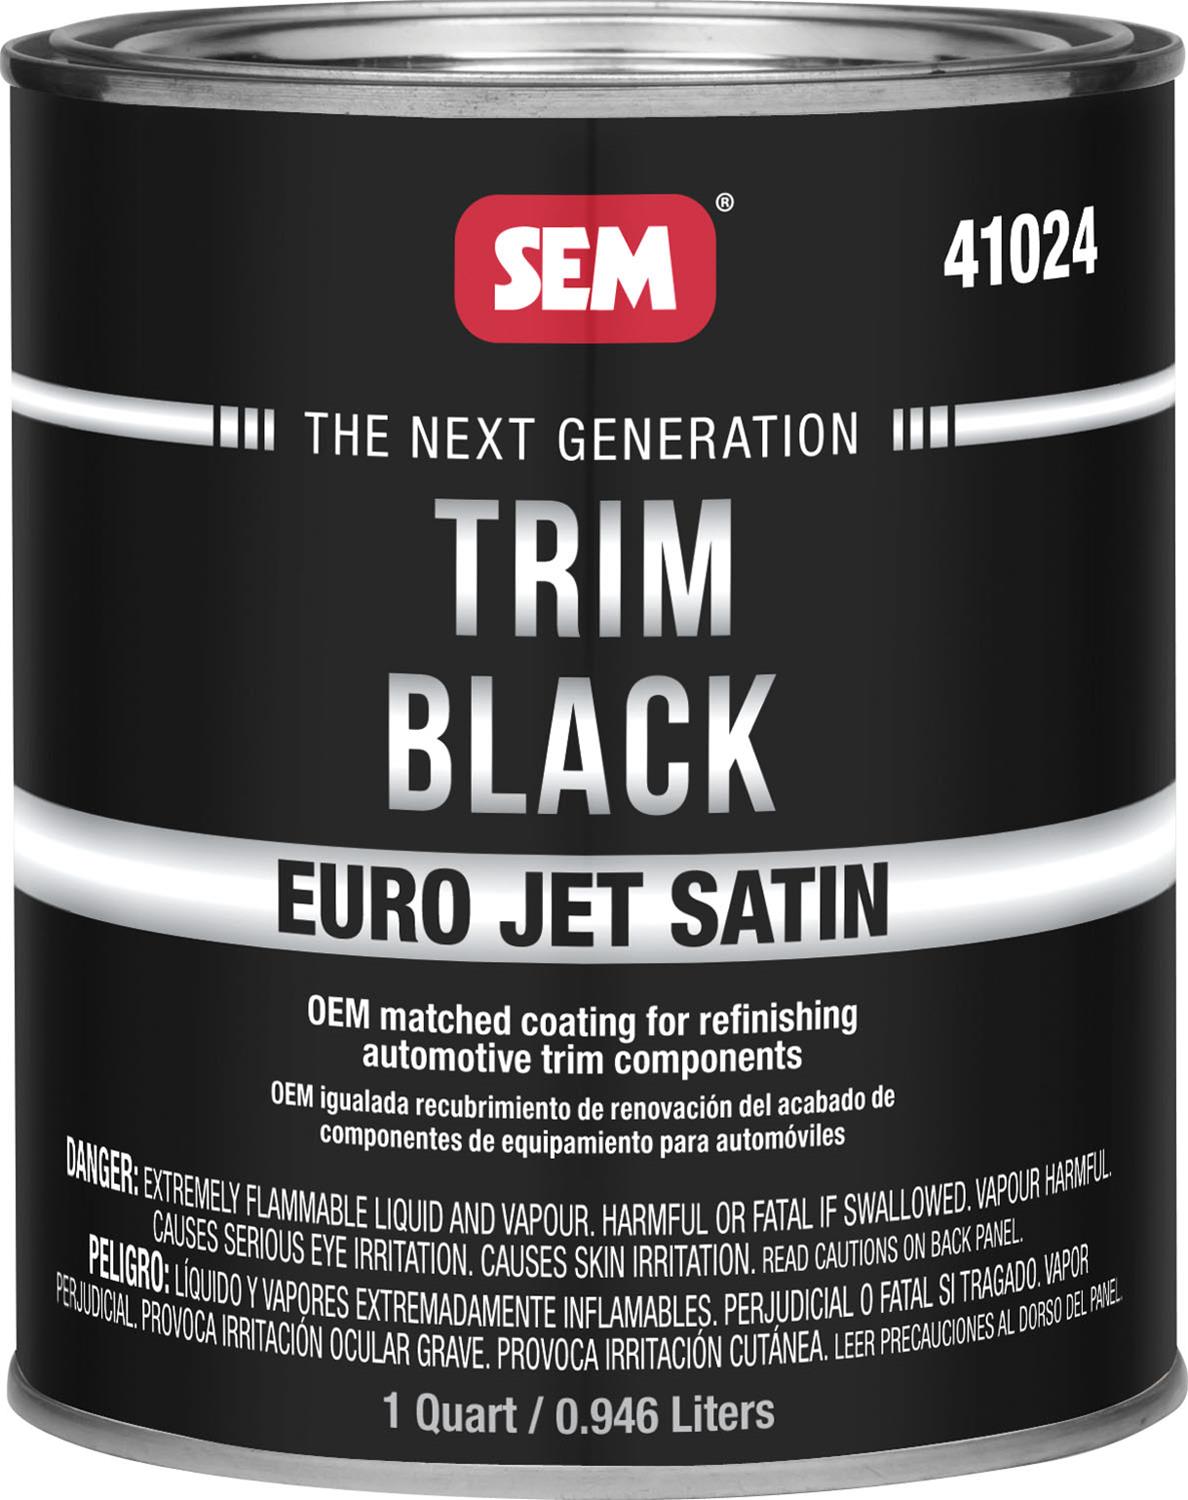 Trim Black Euro Jet